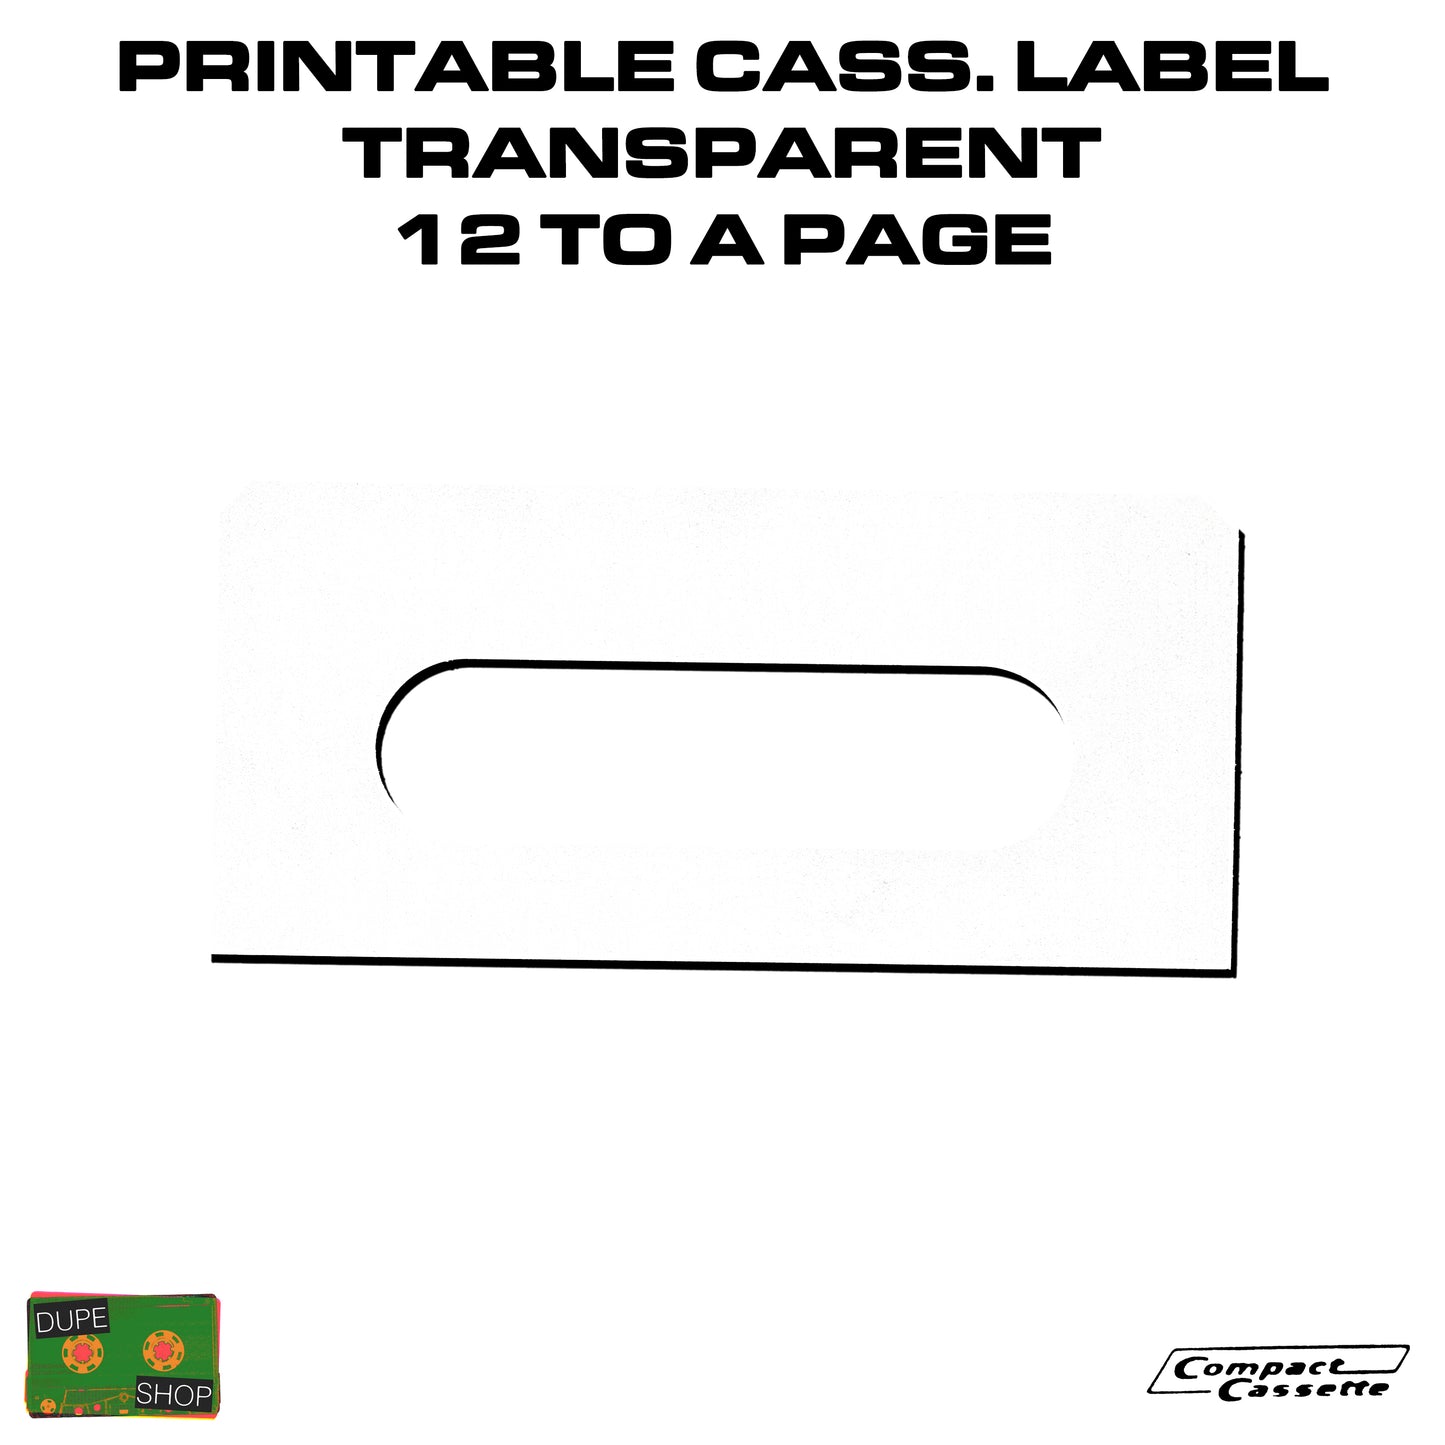 Printable Cassette Labels | Glossy Transparent | 12 Up